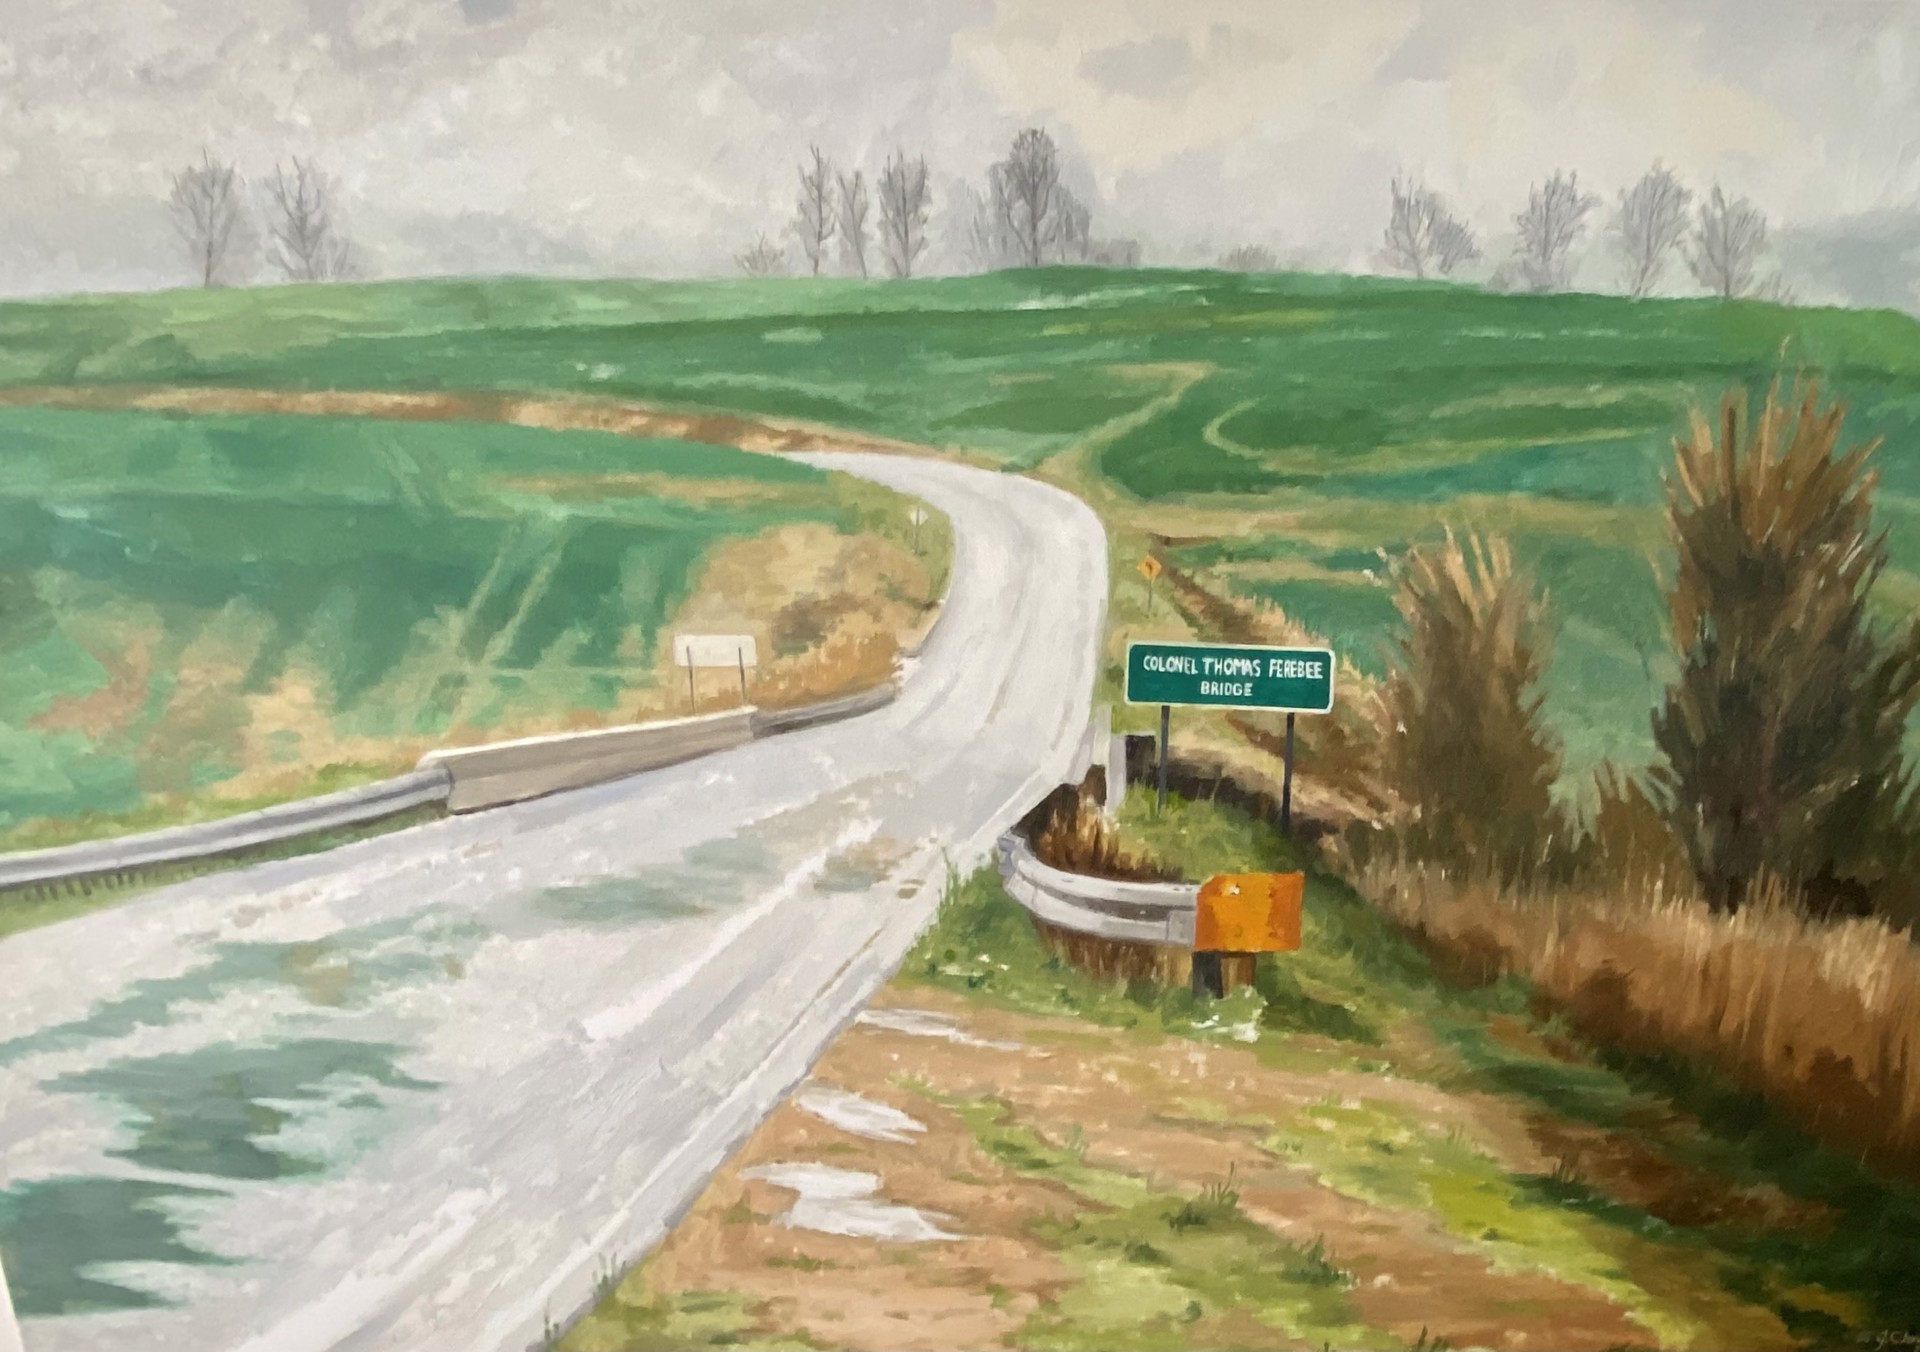 Winter Wheat at Colonel Thomas Freebee Bridge (Murphy to Monteo Series) by J. Chris Wilson